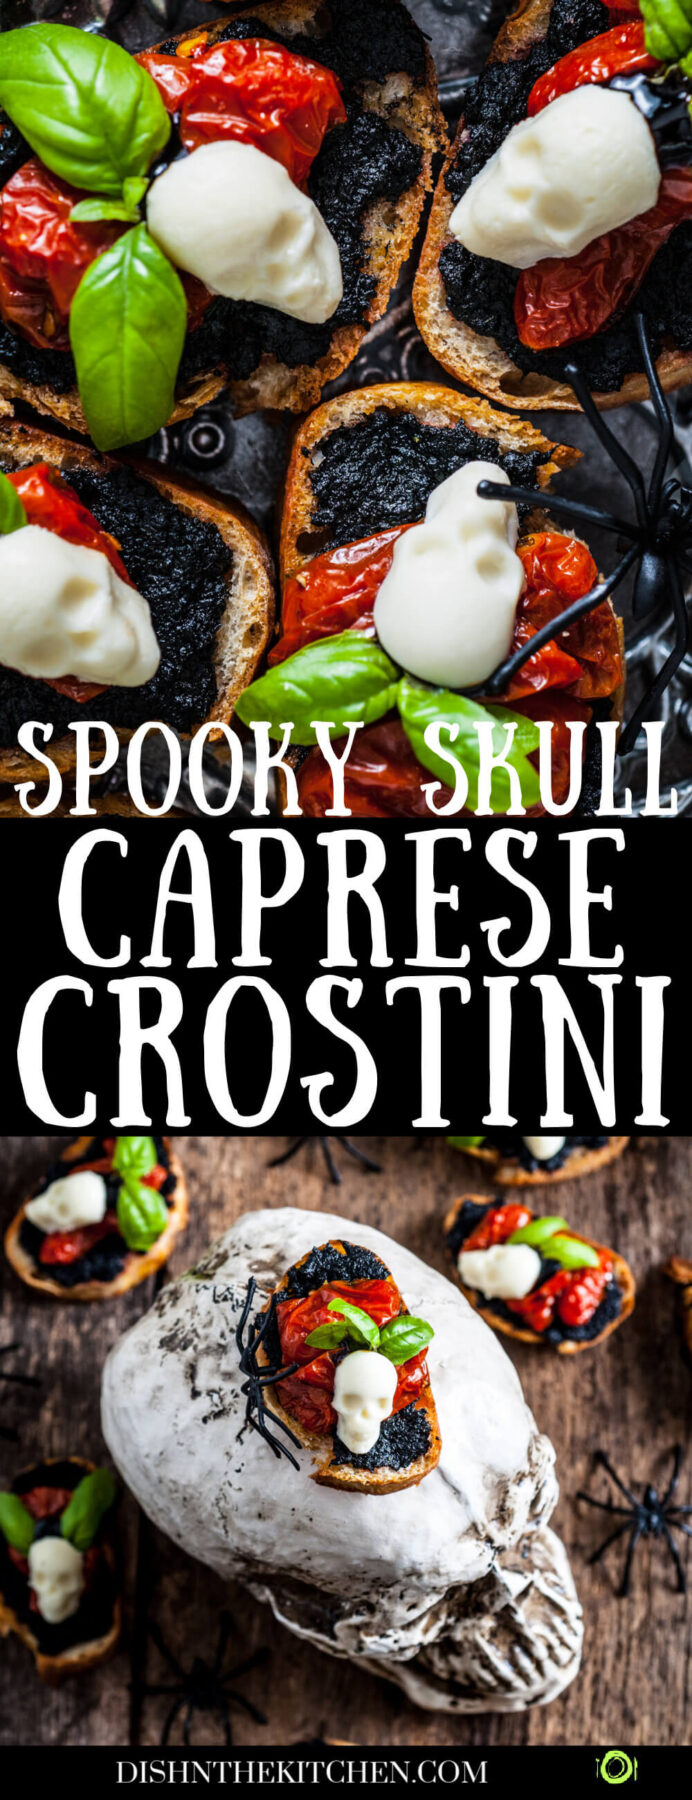 Pinterest image of spooky skull caprese crostini topped with black pesto, roasted tomatoes, a mozzarella skull, and fresh basil leaves.